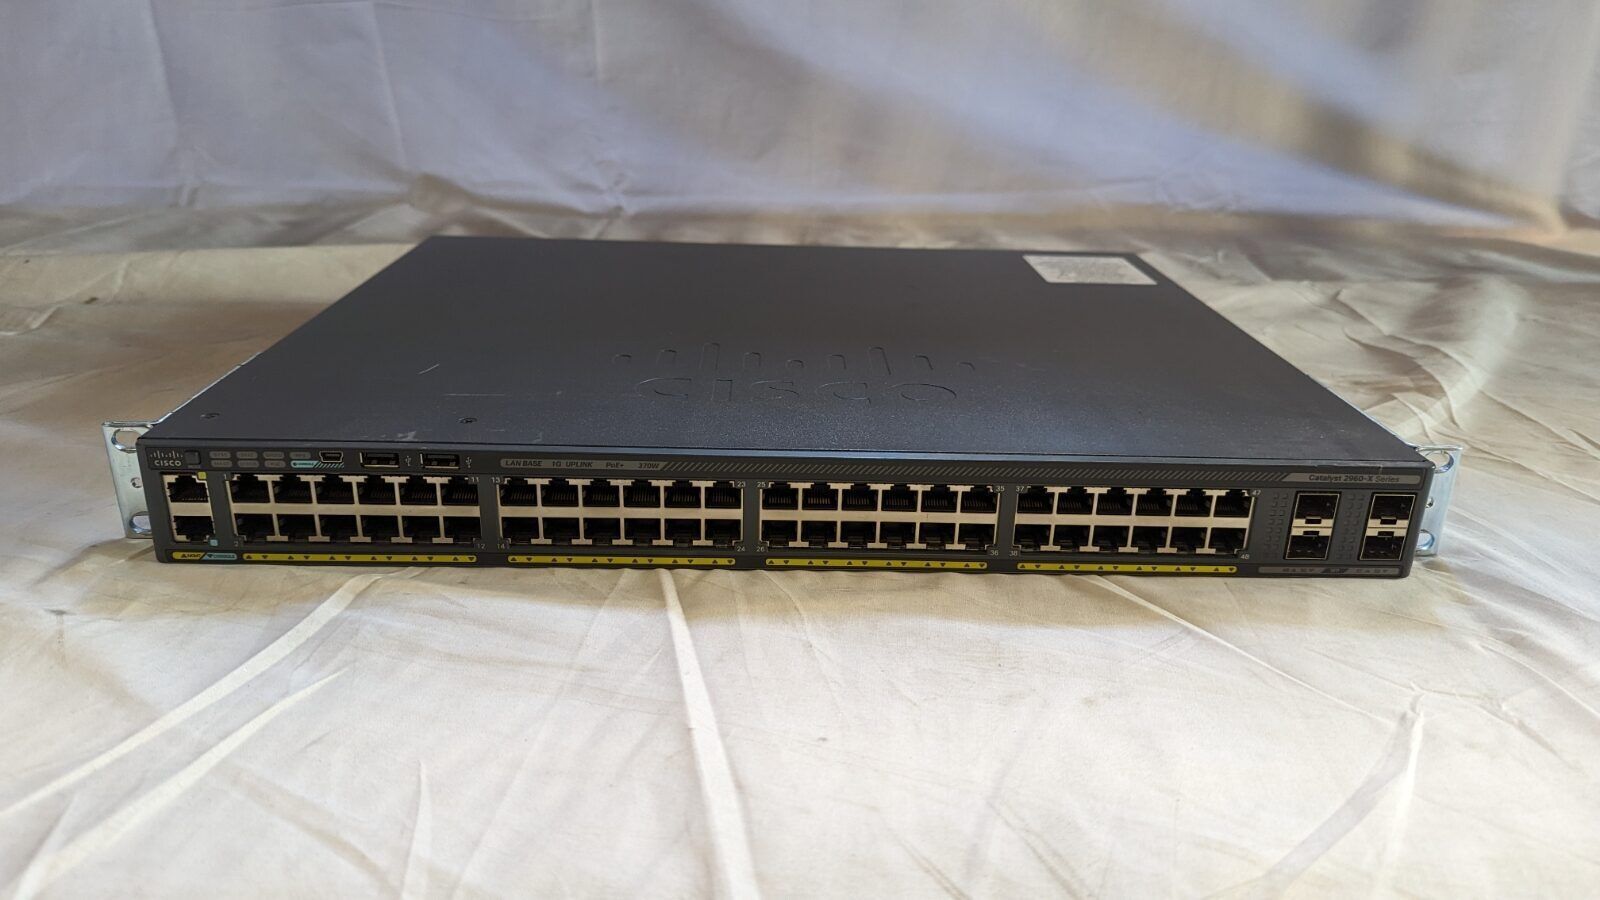 Cisco WS-C2960X-48LPS-L 48 Port 10/100/1000 POE+ GE+4 SFP Switch